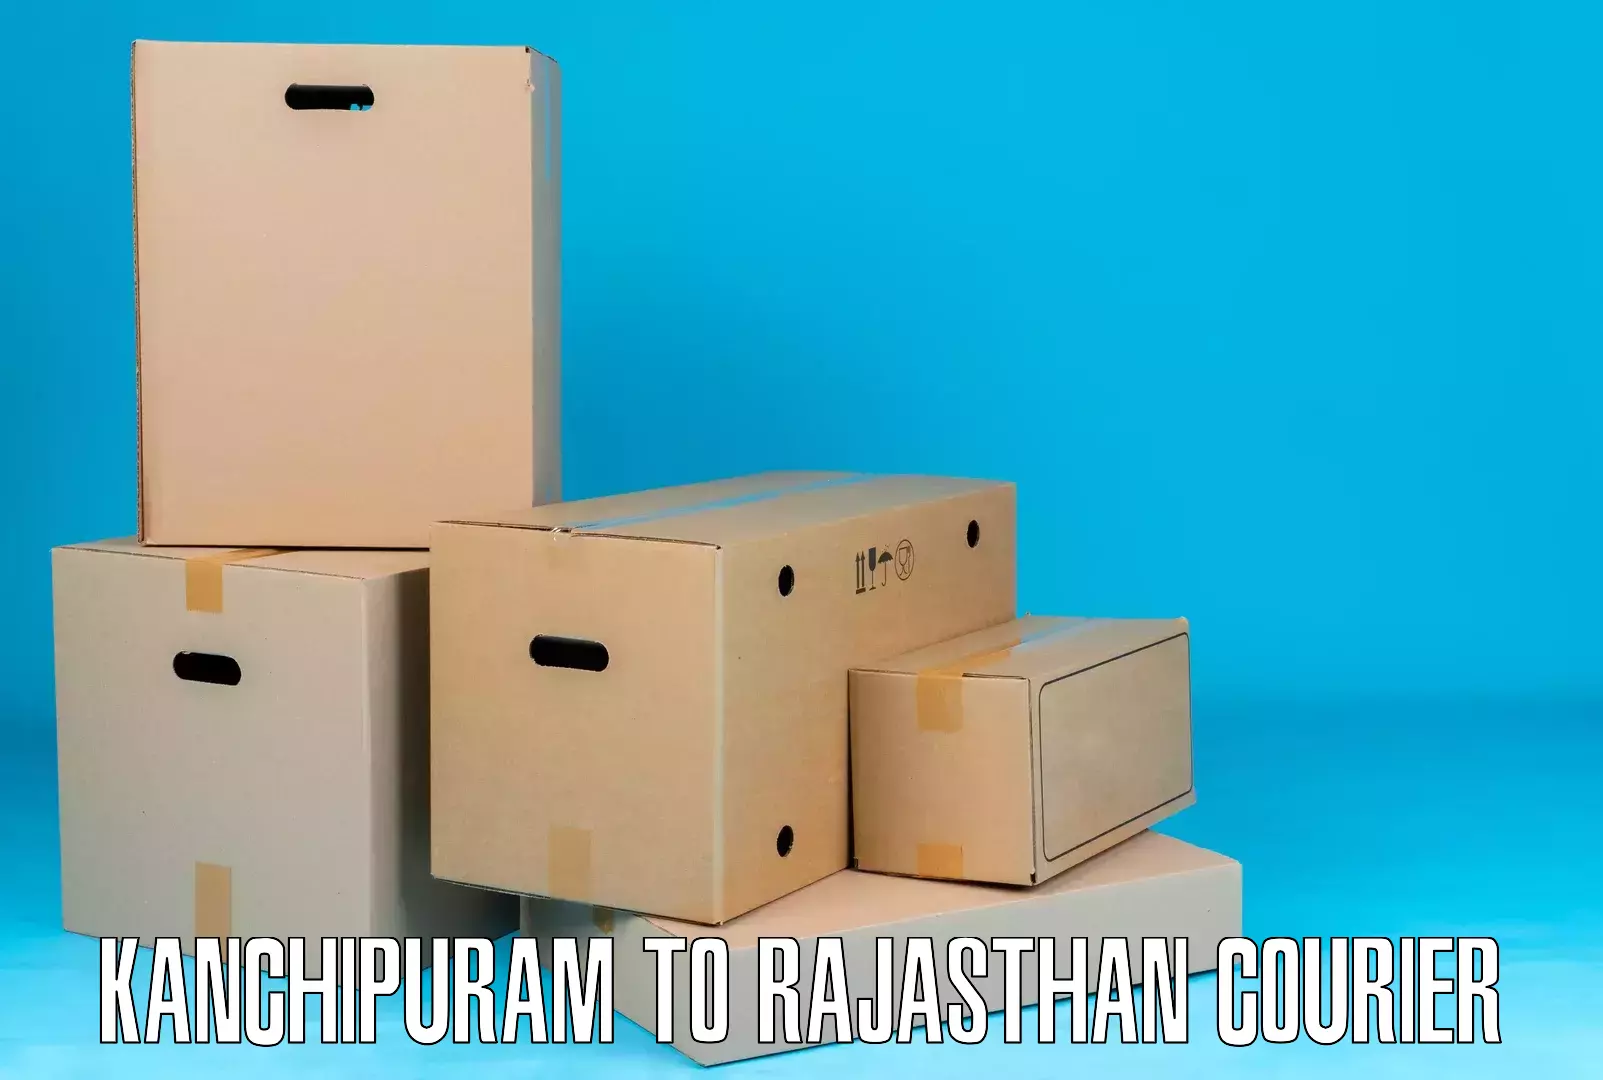 Supply chain delivery Kanchipuram to Jaipur